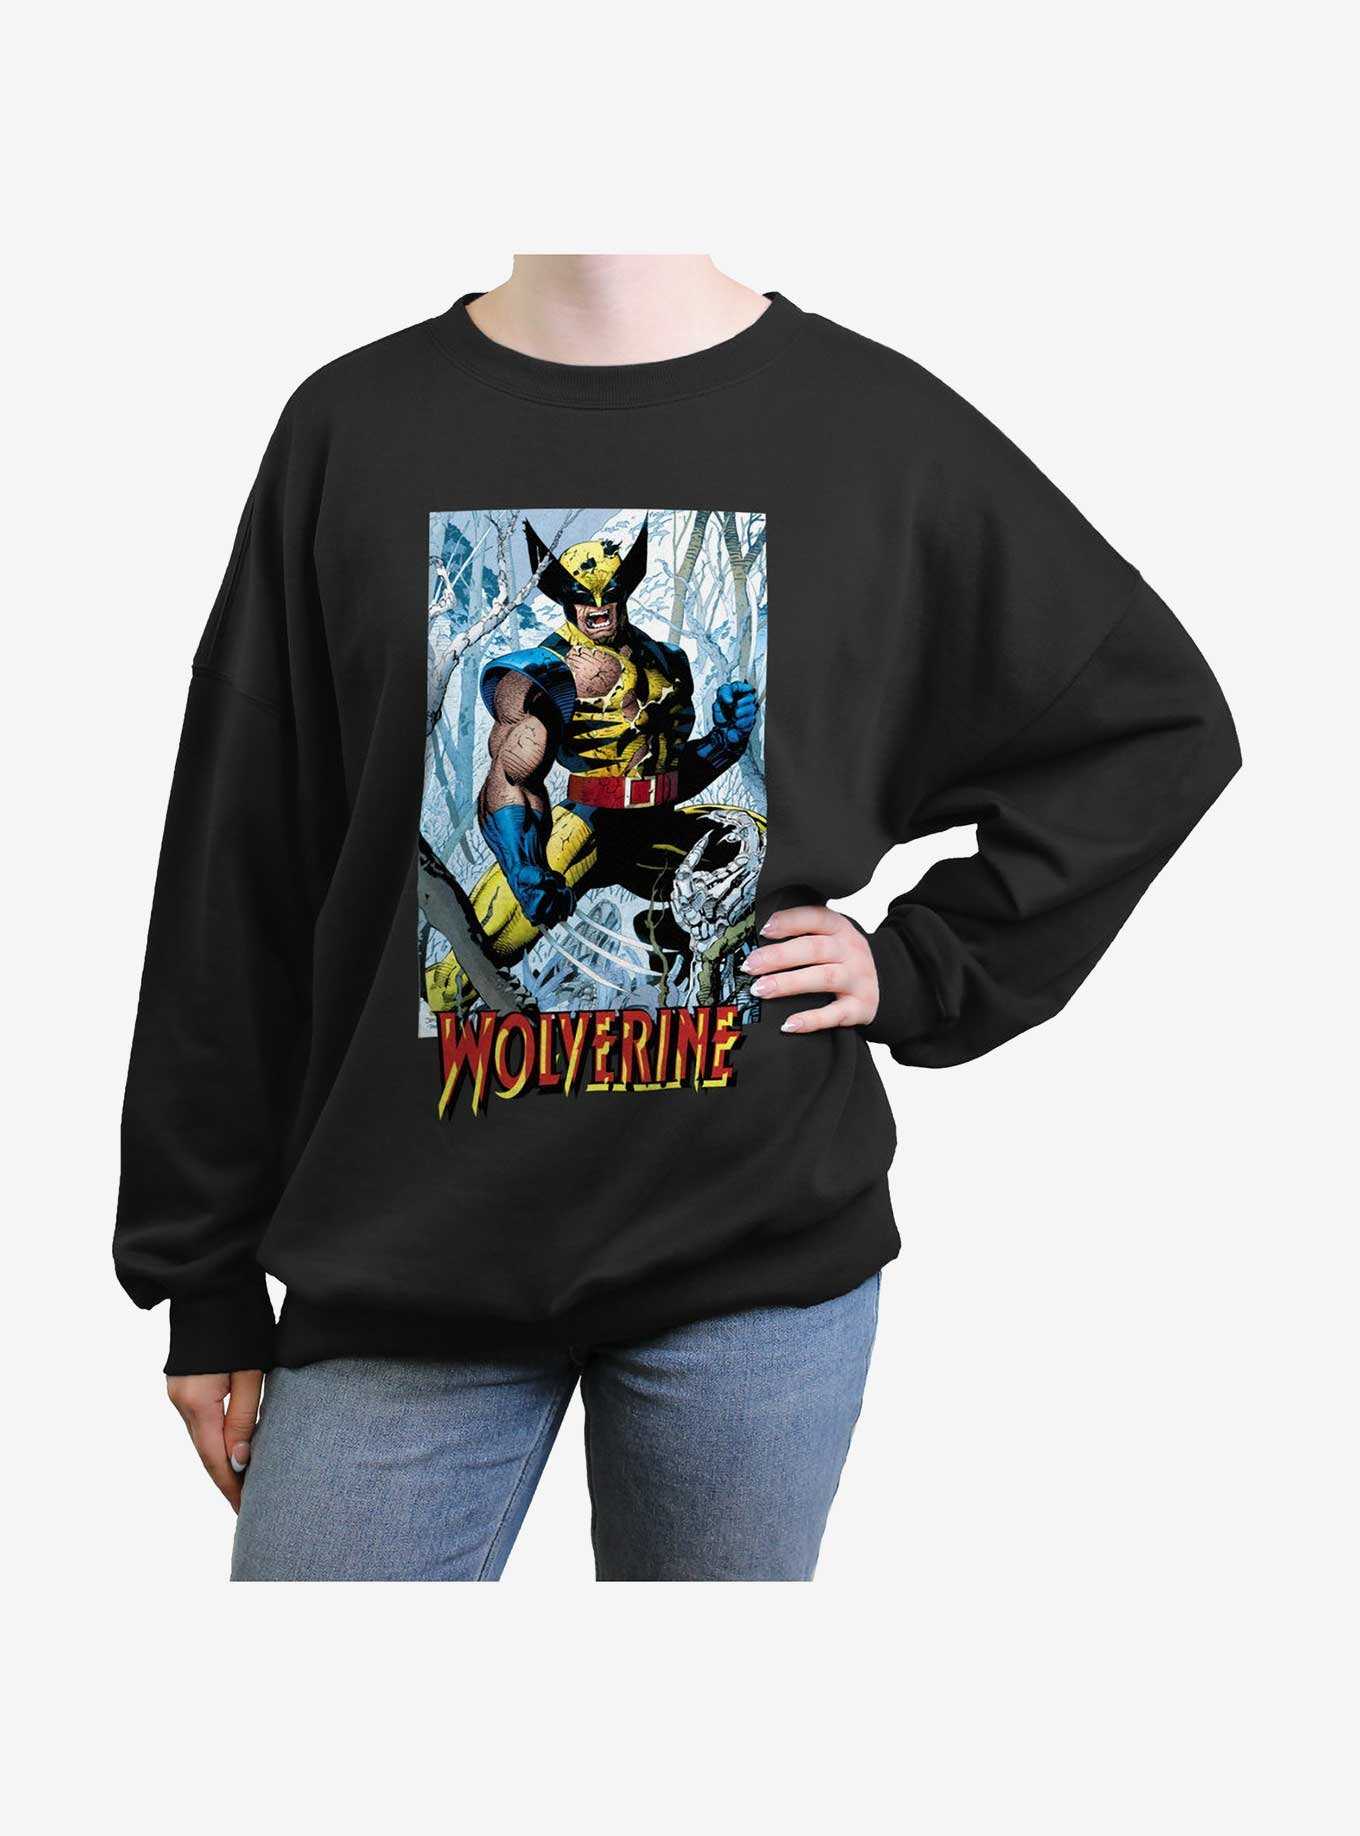 Wolverine Discipline 22 From Then Til Now Trading Card Girls Oversized Sweatshirt, , hi-res